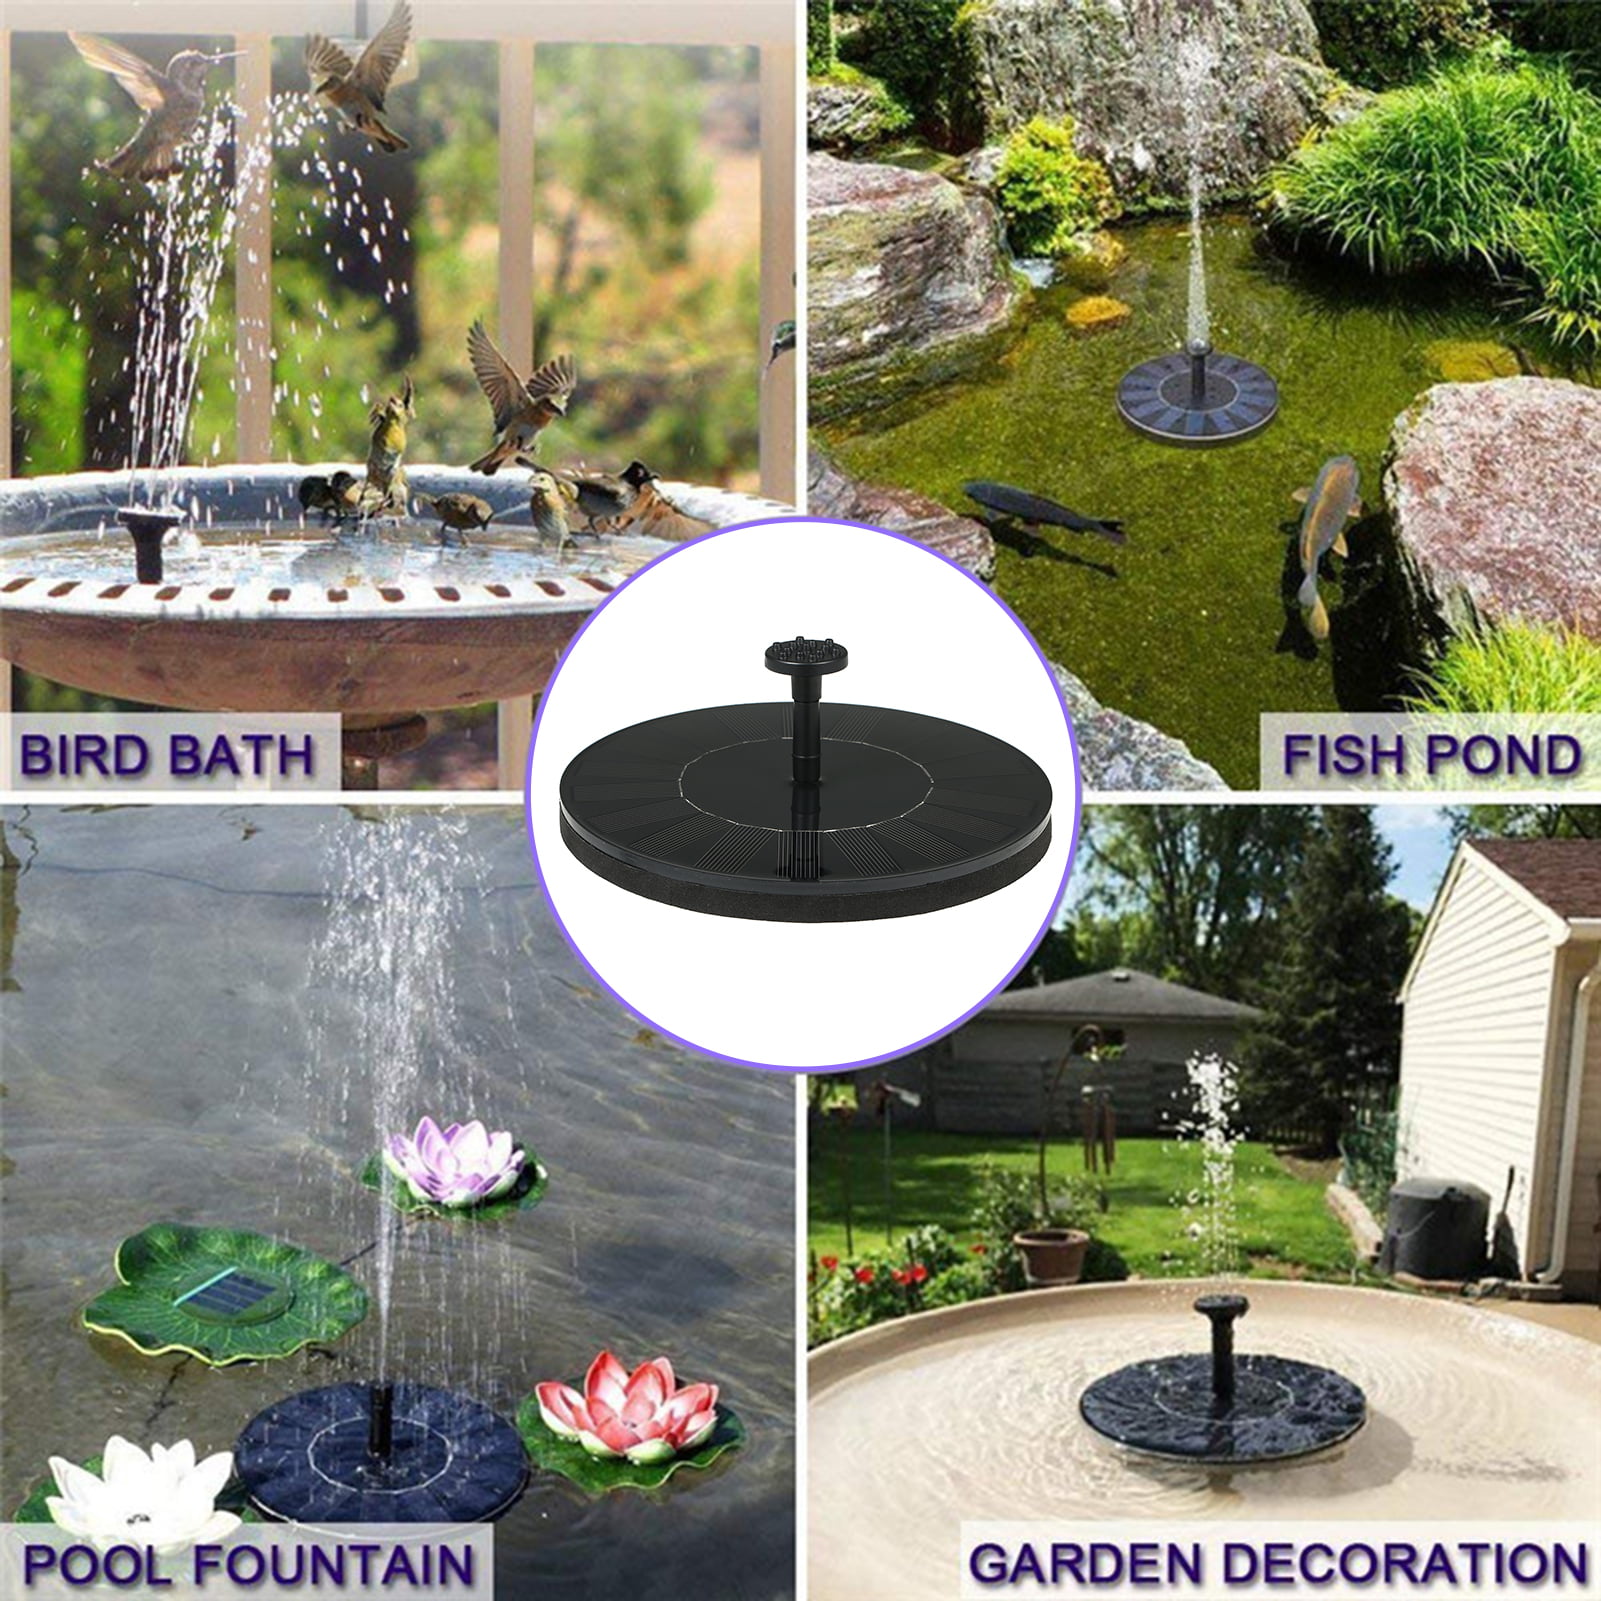 Best Saving Depot-Solar Bird Bath Fountain Pump- for Bird Bath,Fish Tank,Garden Decoration,Pond,Pool,Outdoor 1.4W Solar Fountain with 4 Nozzles 